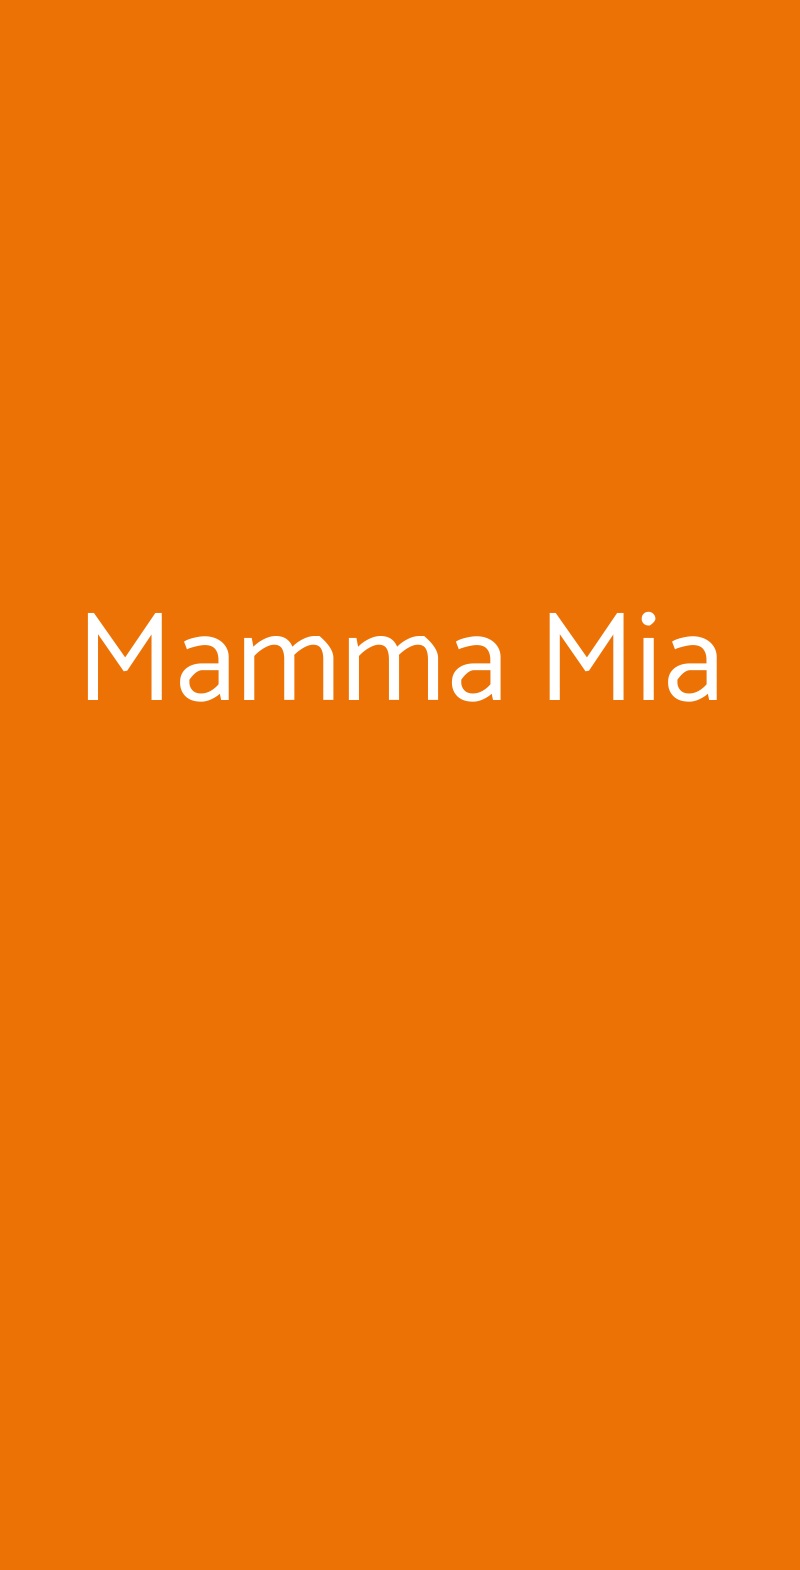 Mamma Mia Roma menù 1 pagina